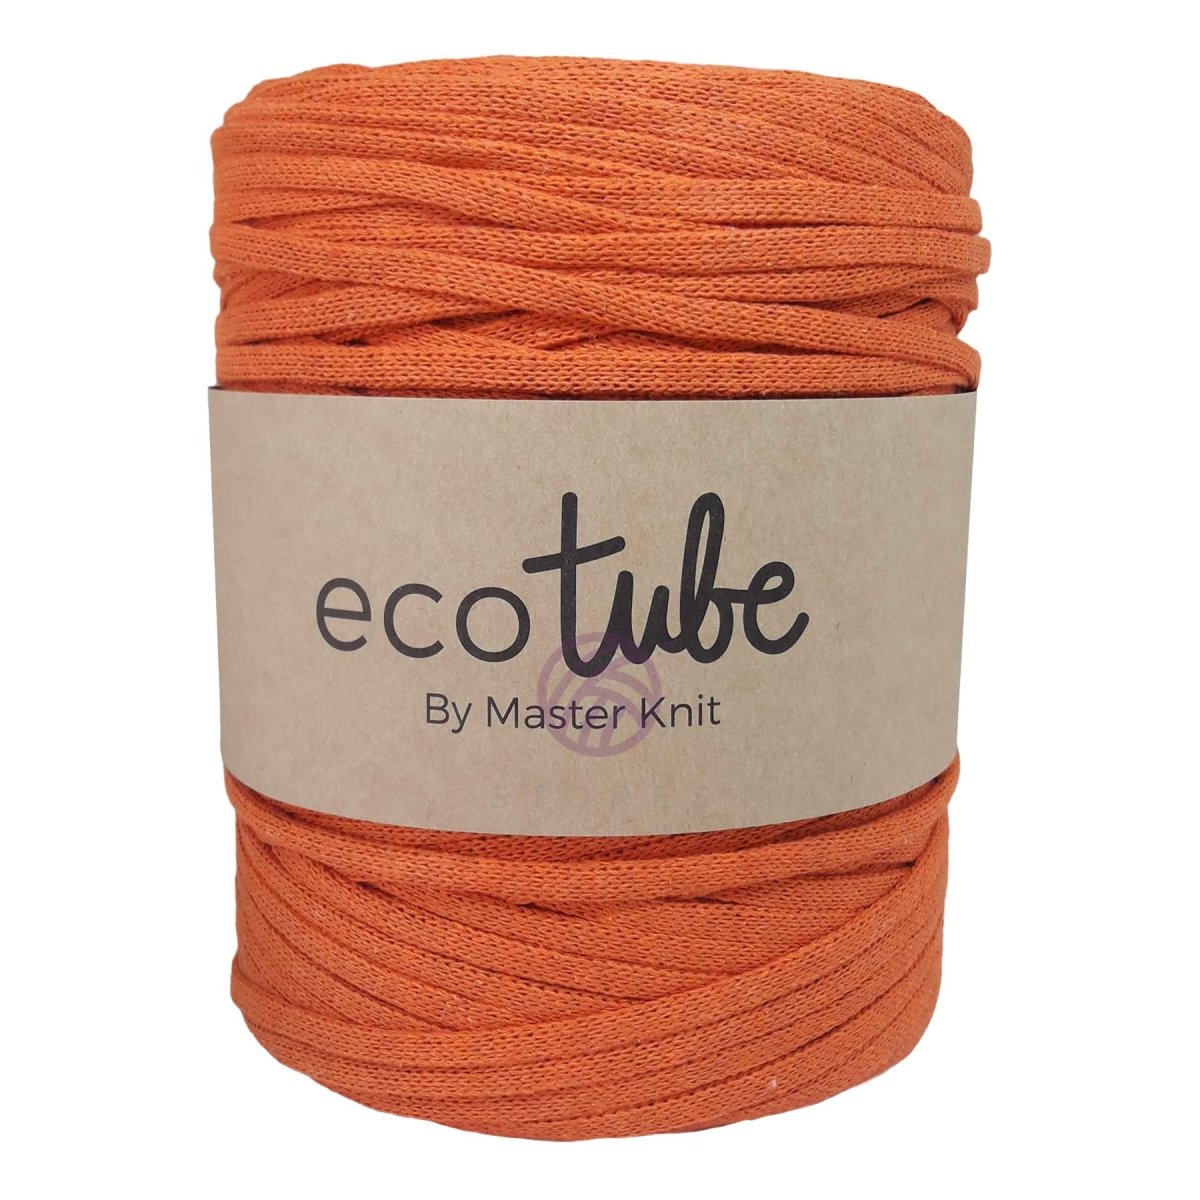 ECO TUBE - Crochetstores9380-237